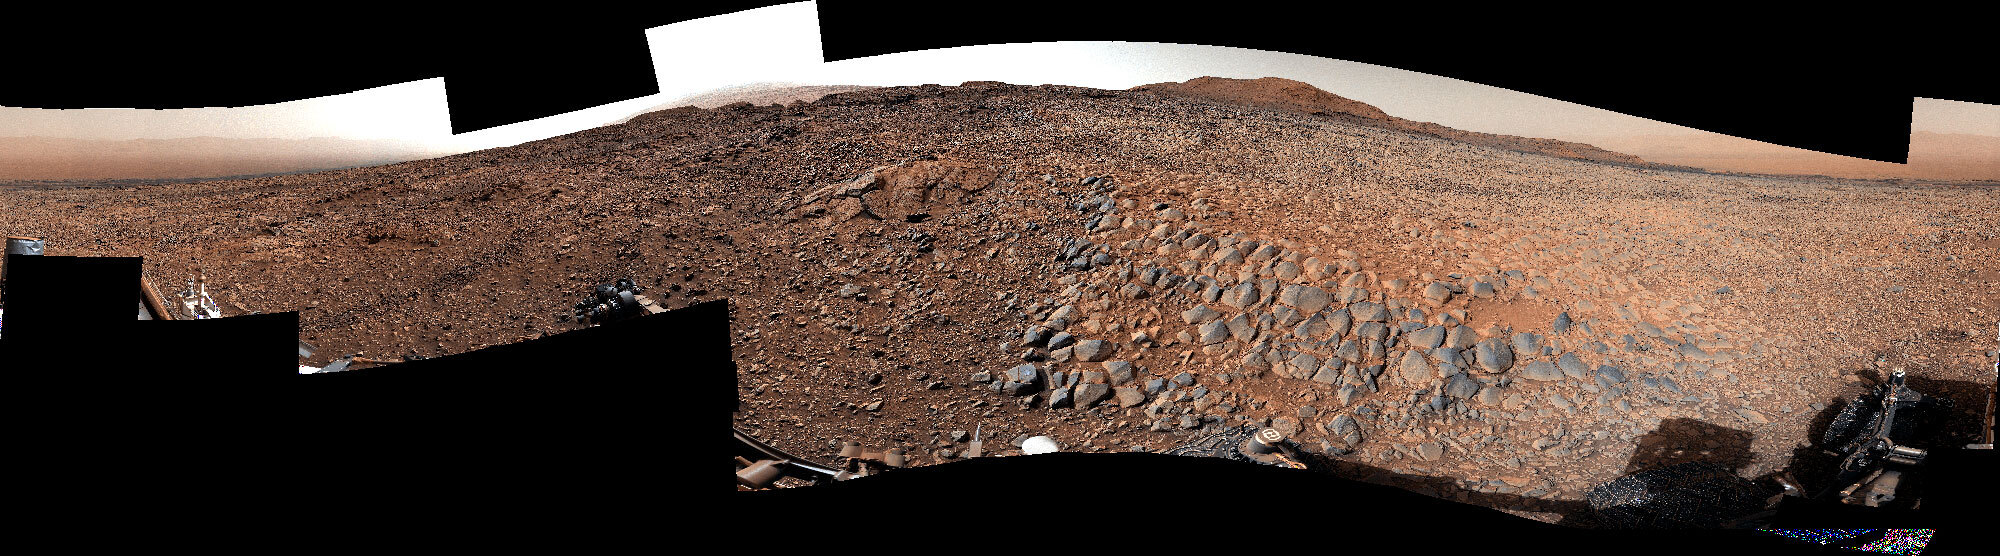 Curiosity's 360-Degree Panorama of 'Gator-Back' Rocks on 'Greenheugh'